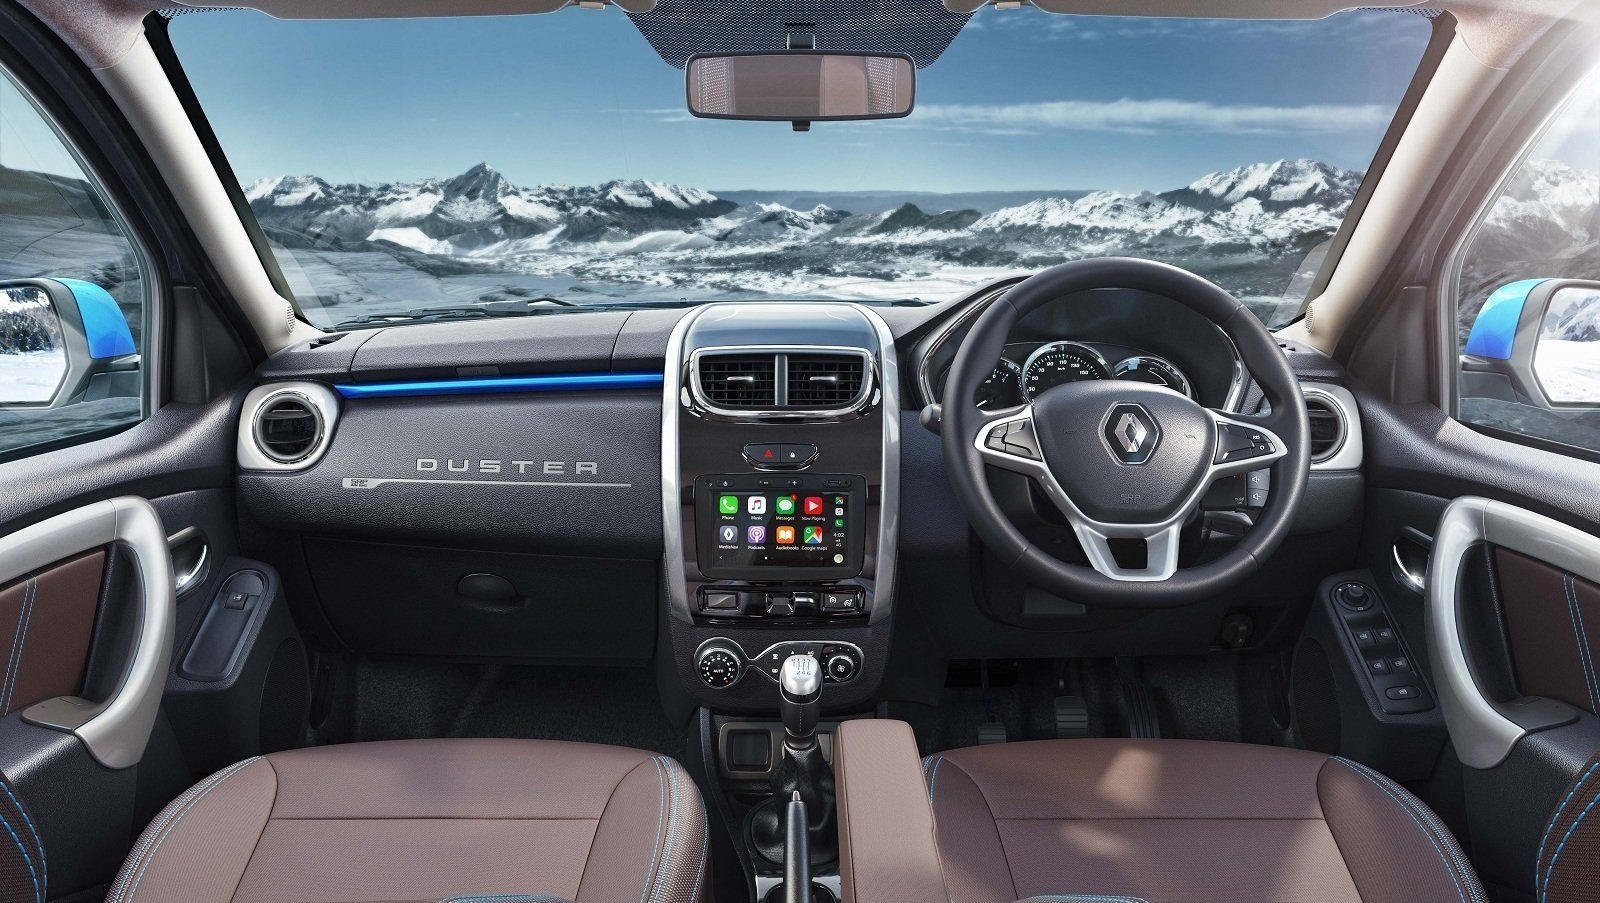 Renault-Duster-Interior-Dashboard.jpg